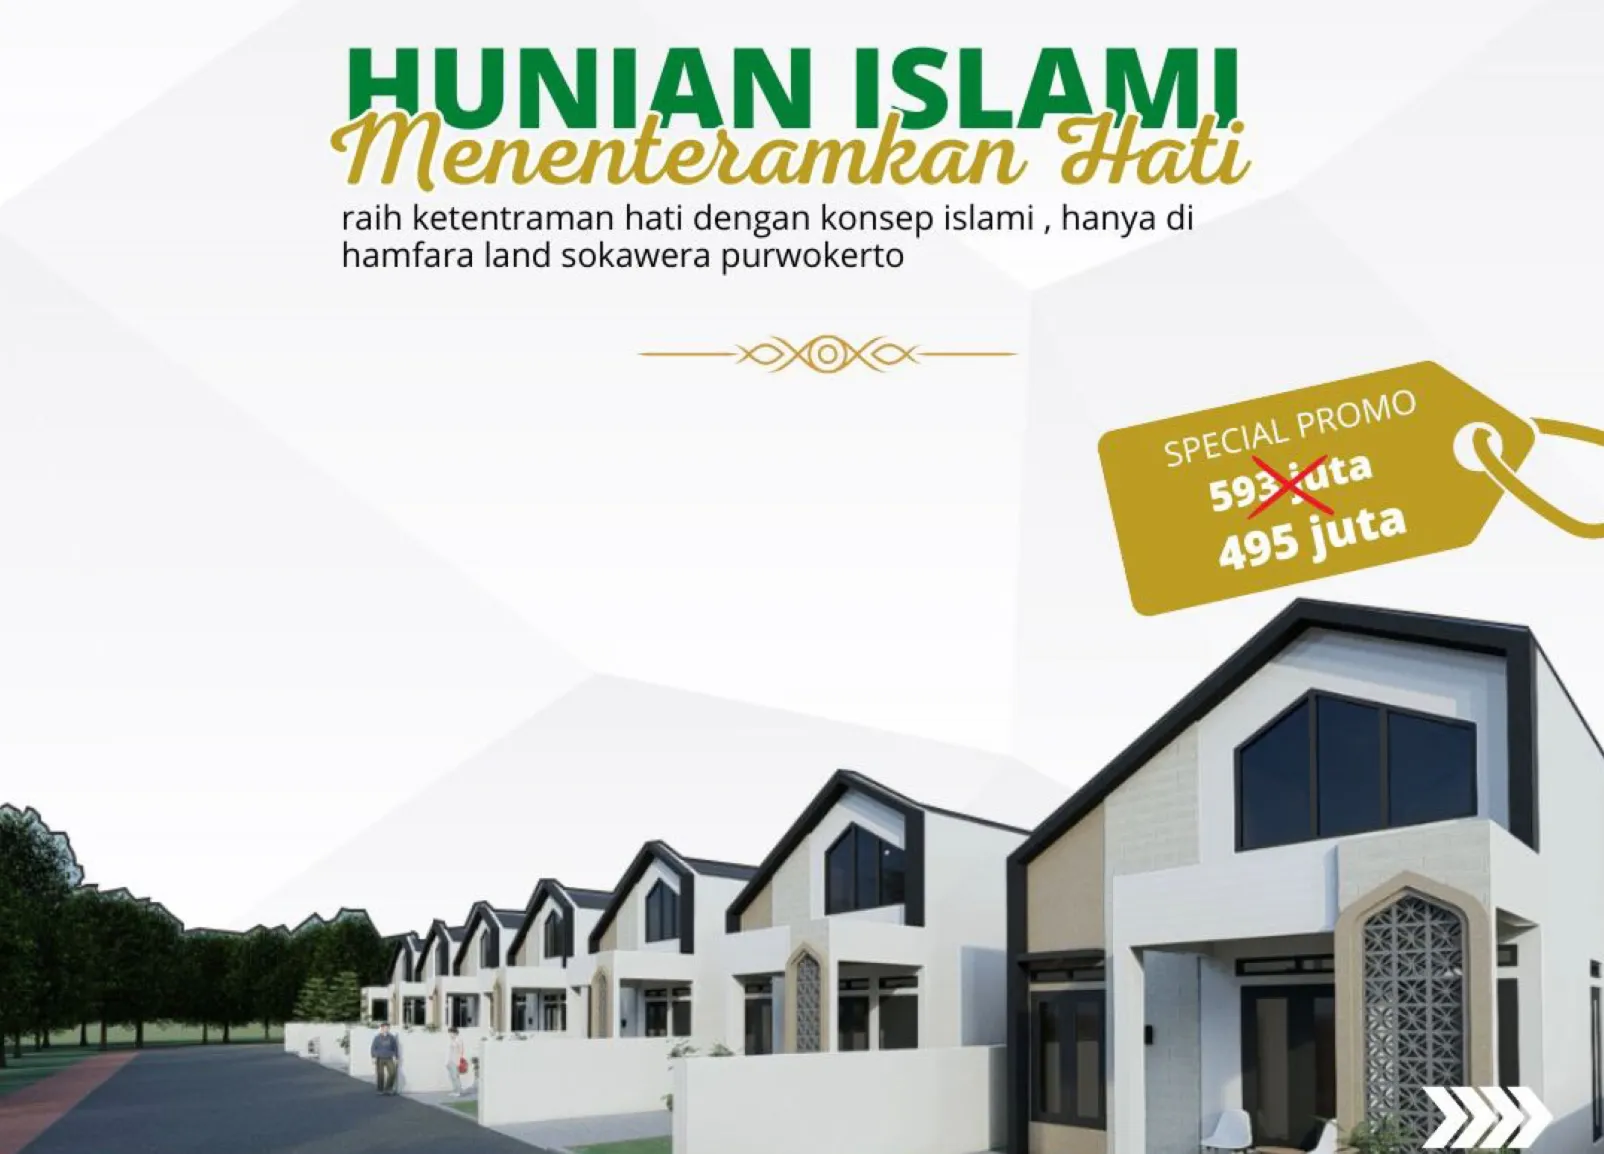 Dijual Rumah Syariah di Purwokerto: Hamfara Land Sokawera